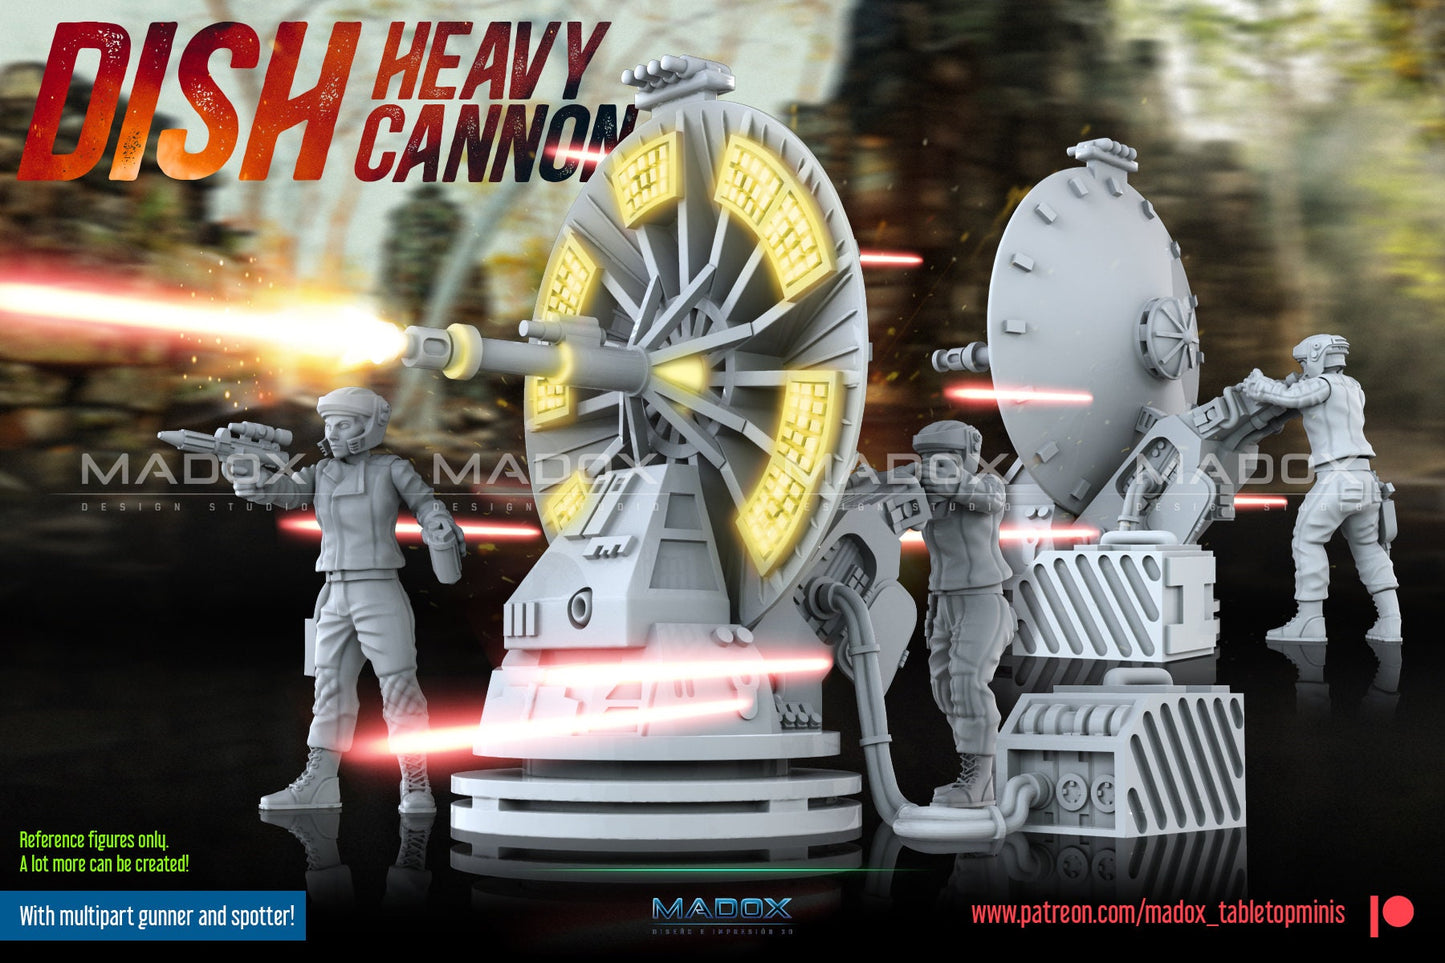 Legion - Dish Heavy Cannon (Custom Order)